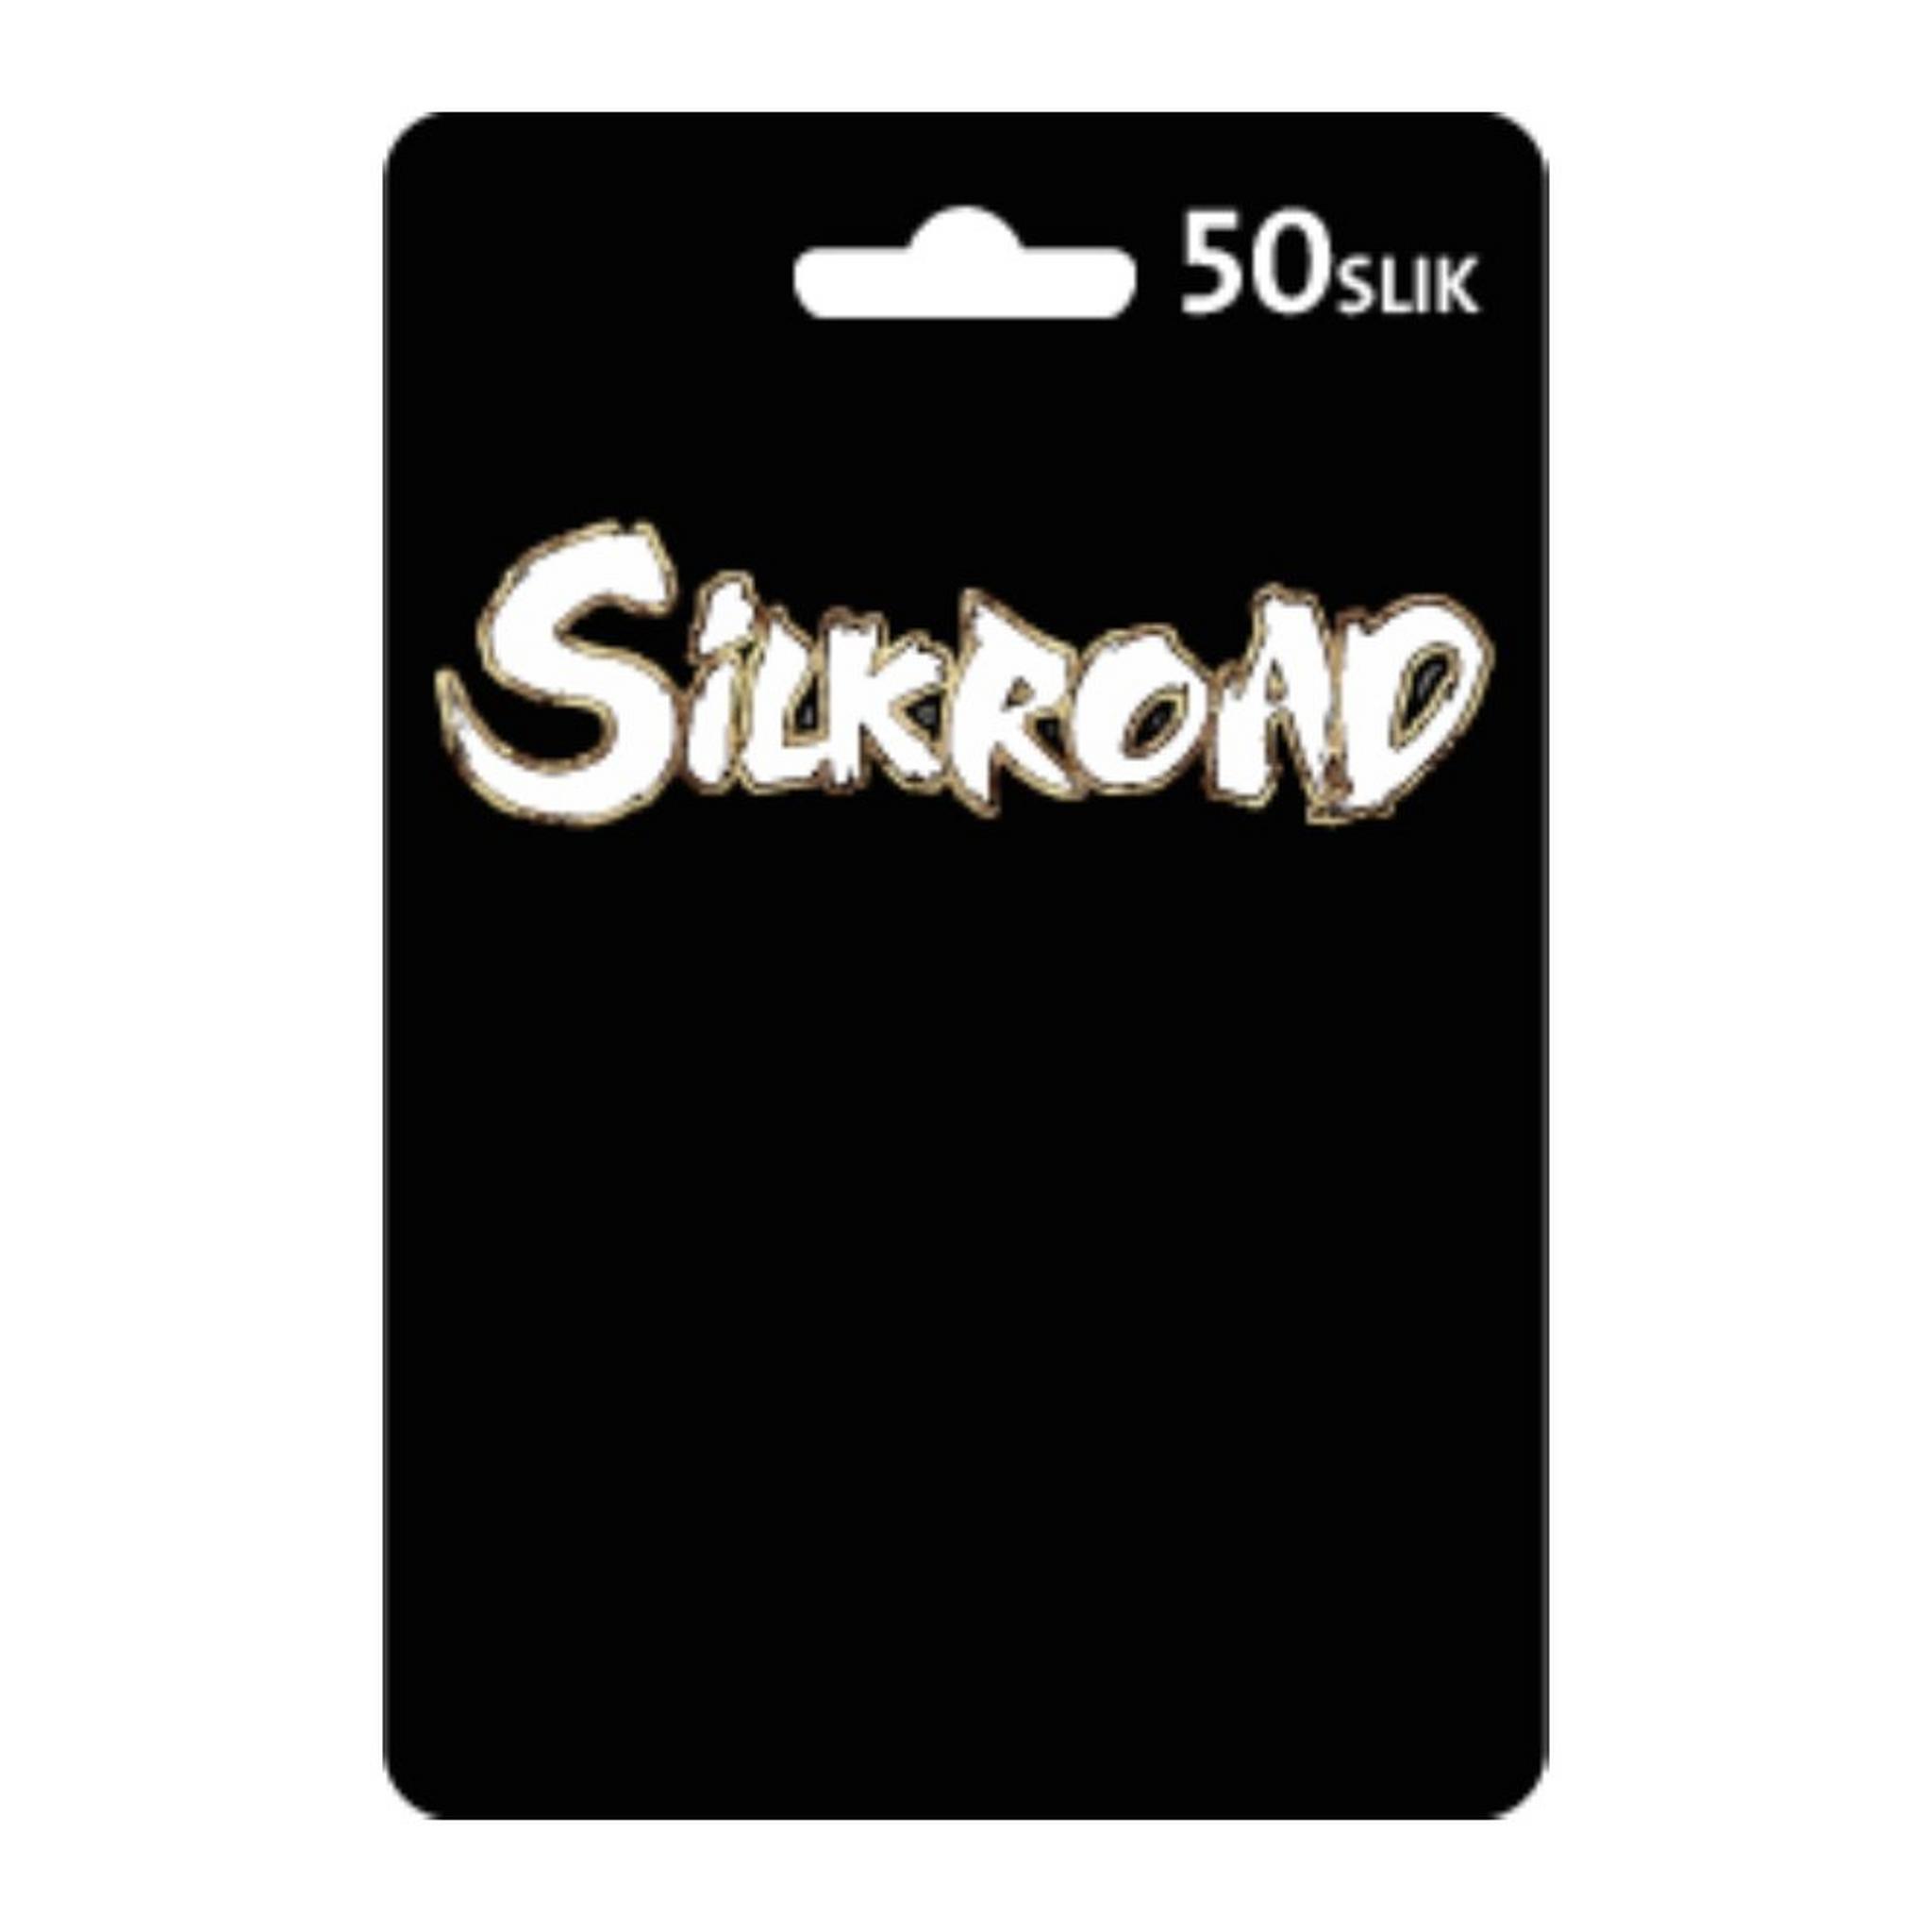 Silkroad Game Card - 50 Silk